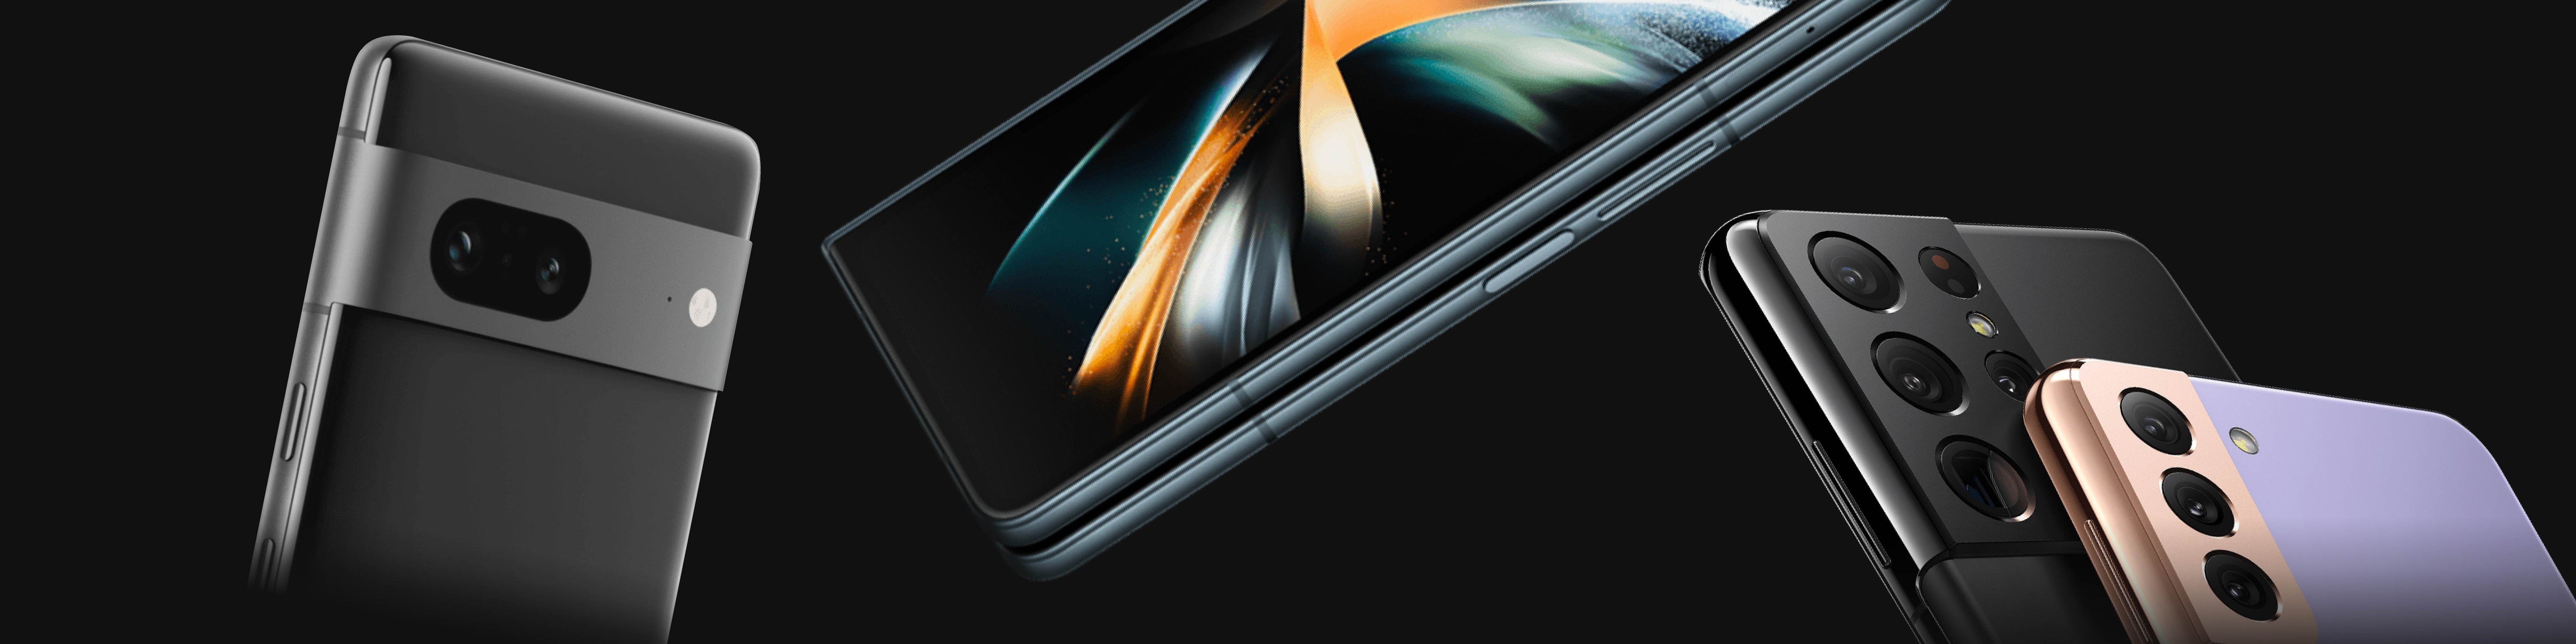 Galaxy Note10, 256GB, Certified Re-Newed